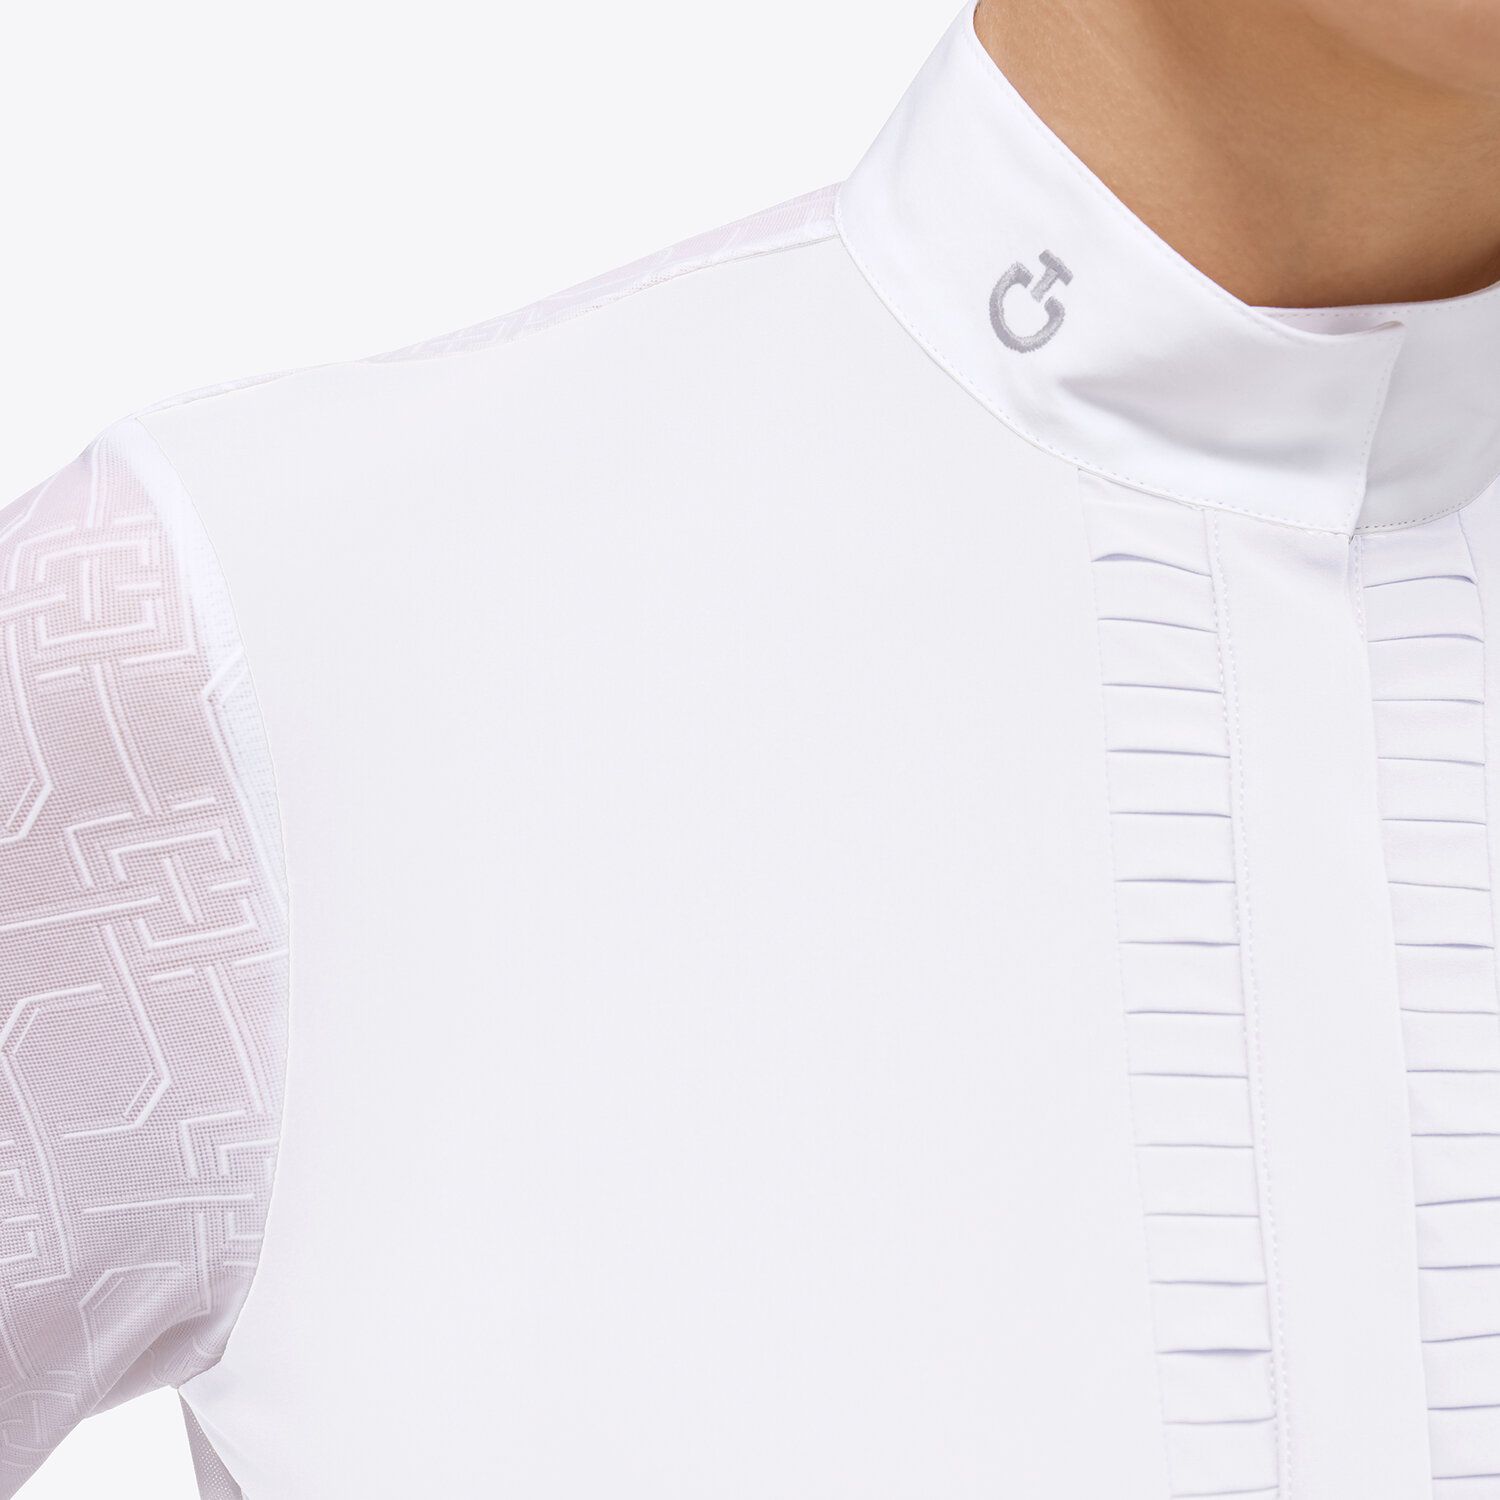 Cavalleria Toscana Women’s jersey show shirt WHITE/KNIT-3